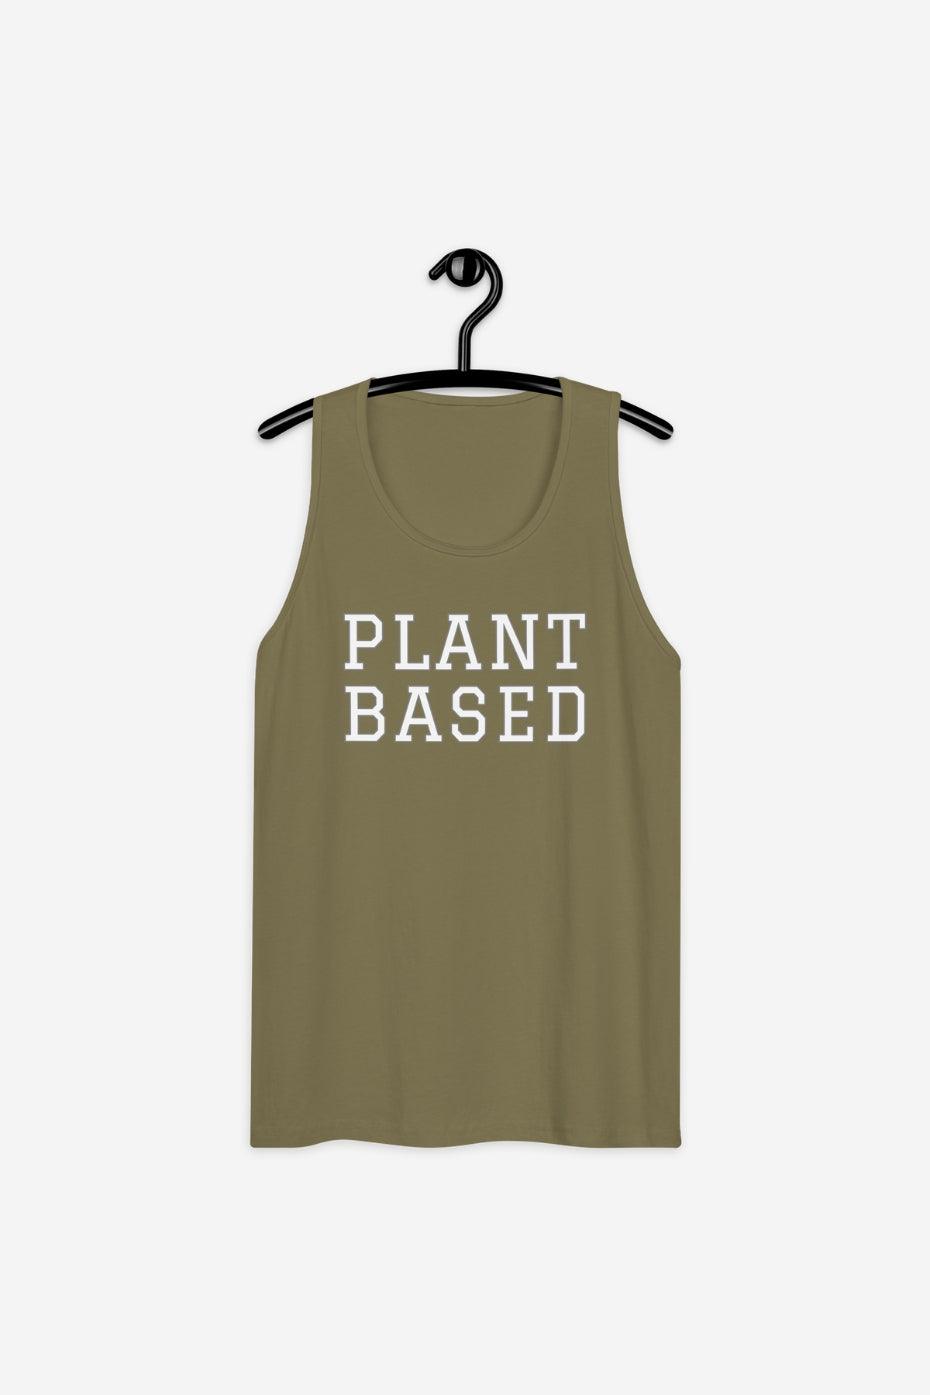 Plant Based Men’s premium tank top